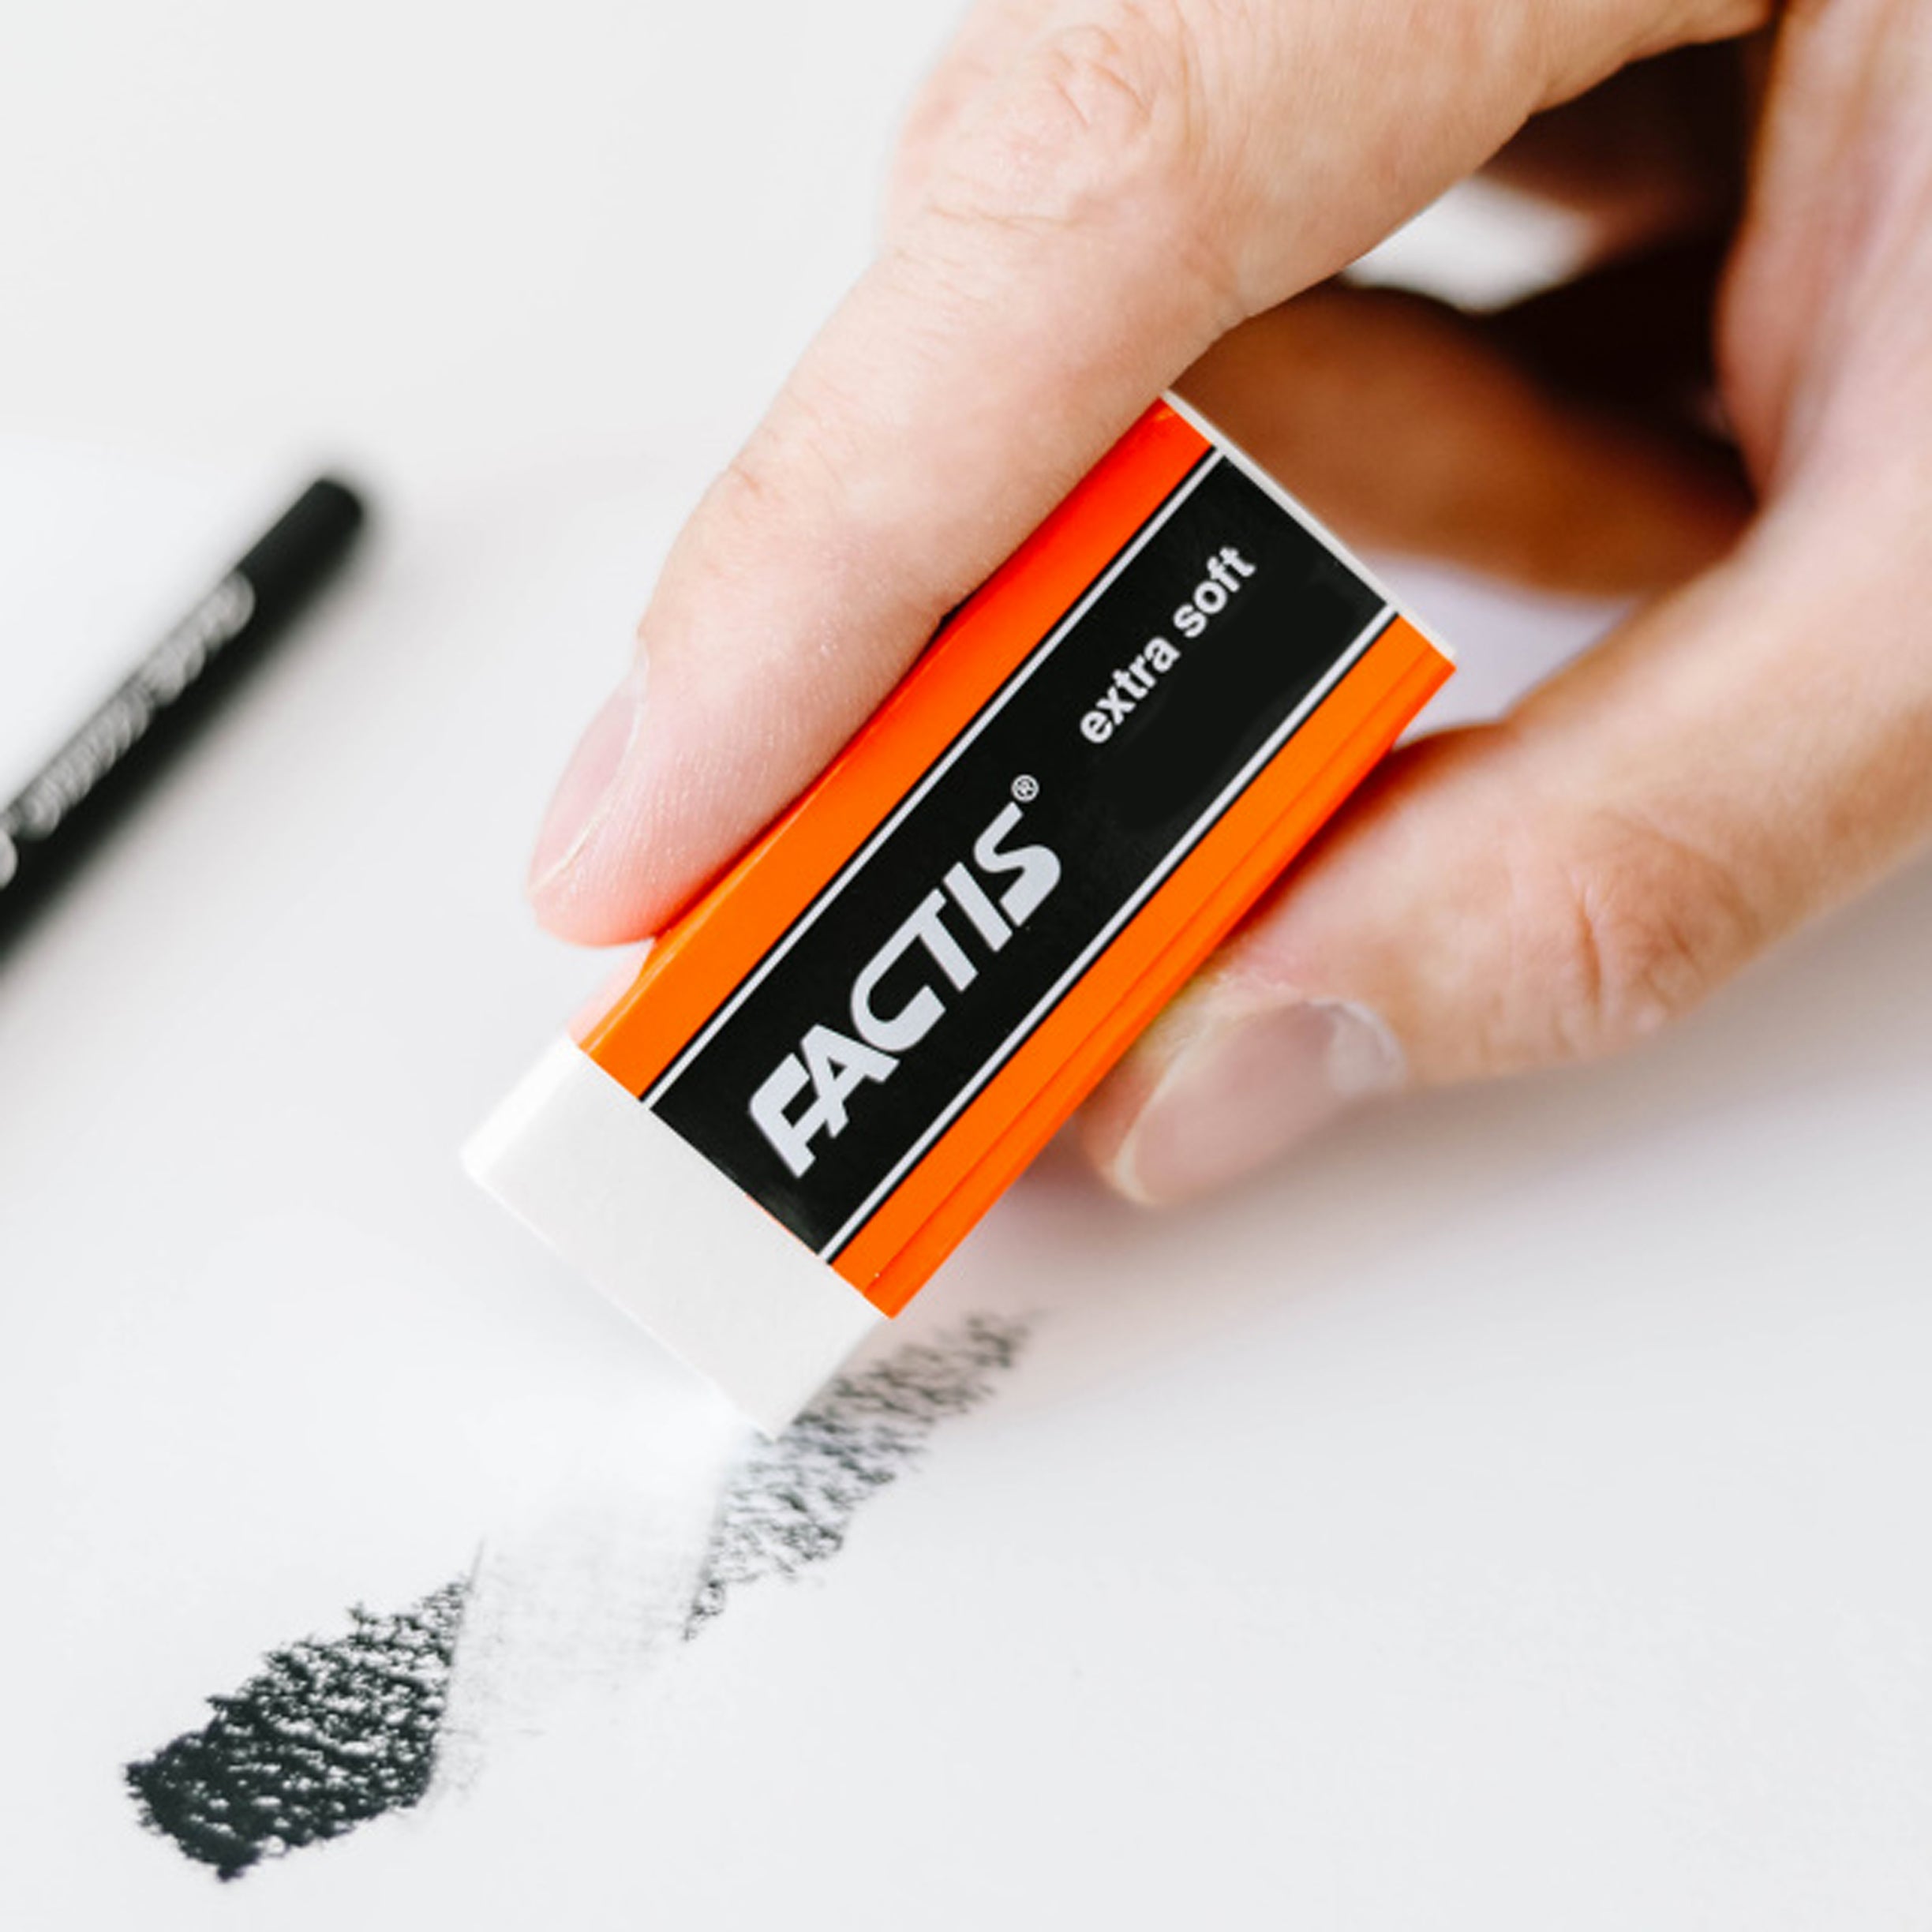 General’s Factis Extra Soft Eraser